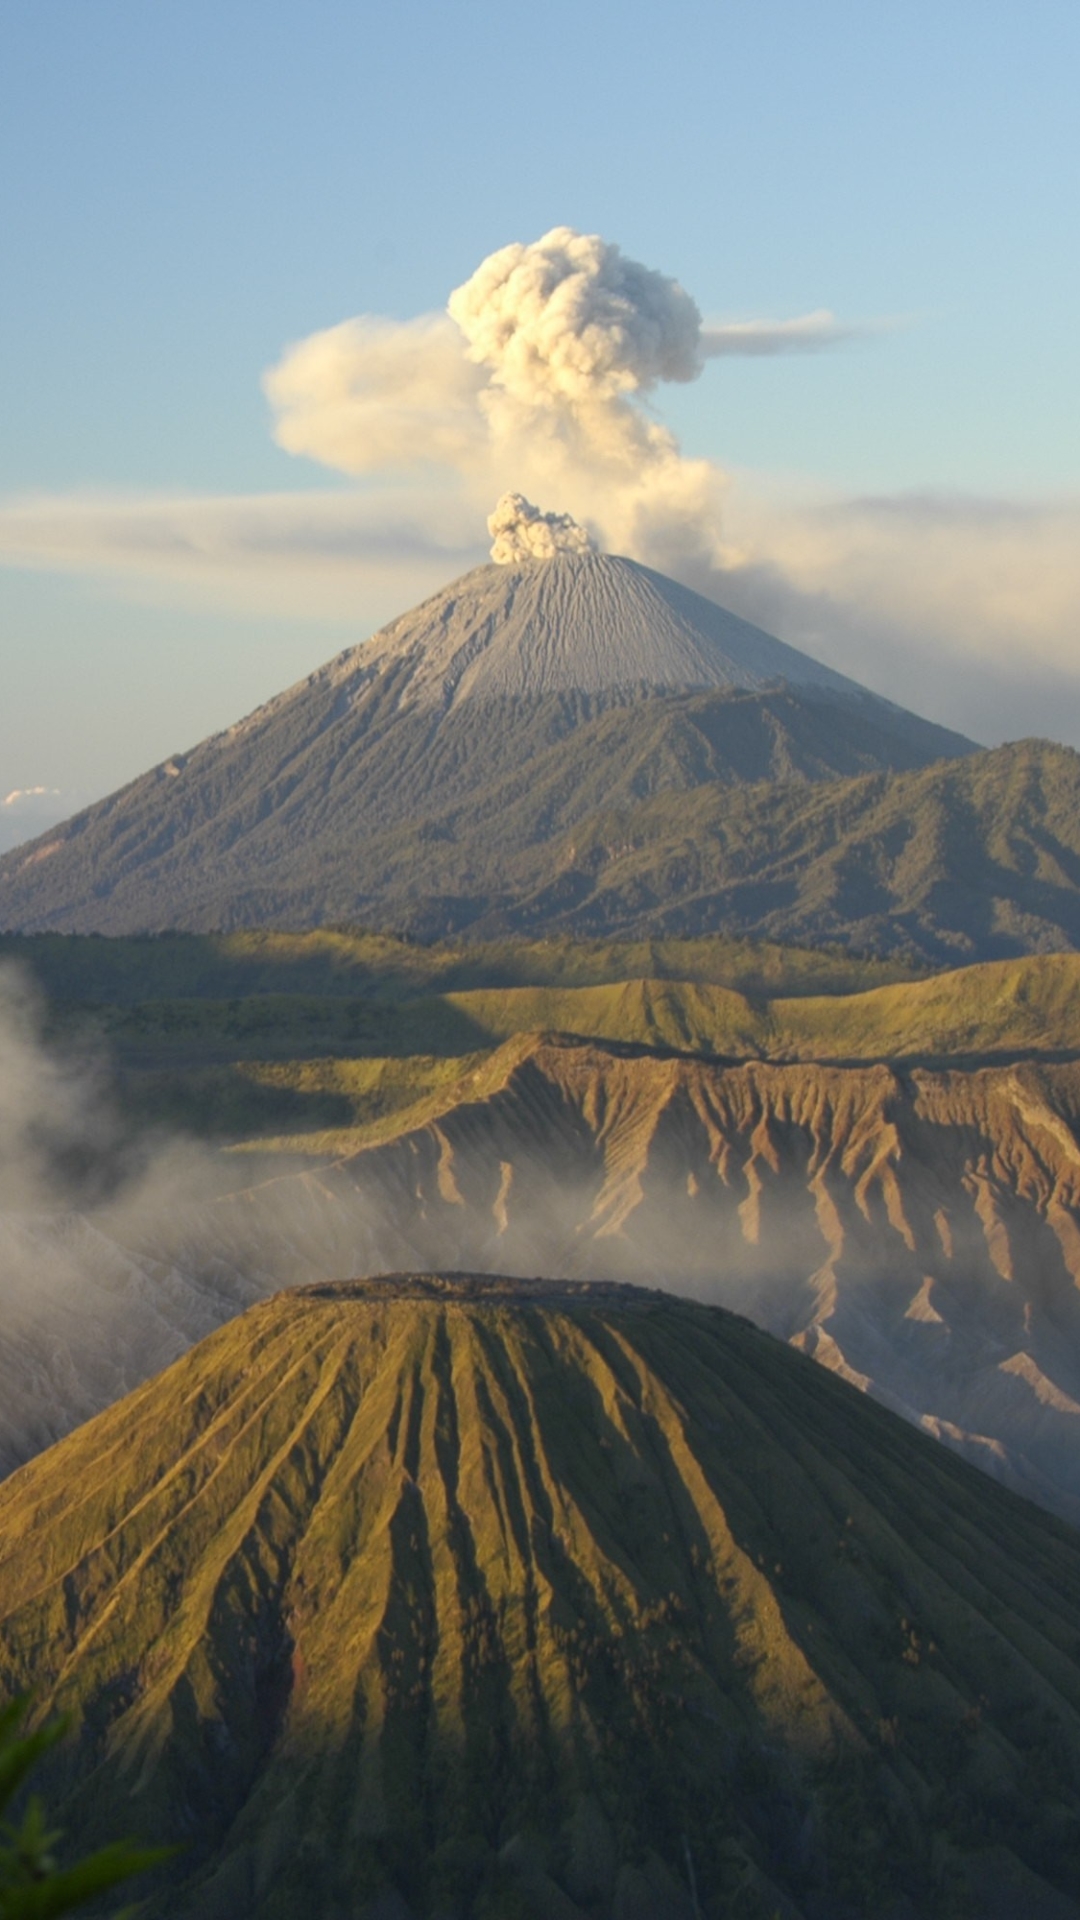 Free HD indonesia, mount bromo, earth, eruption, stratovolcano, java (indonesia), volcanoes